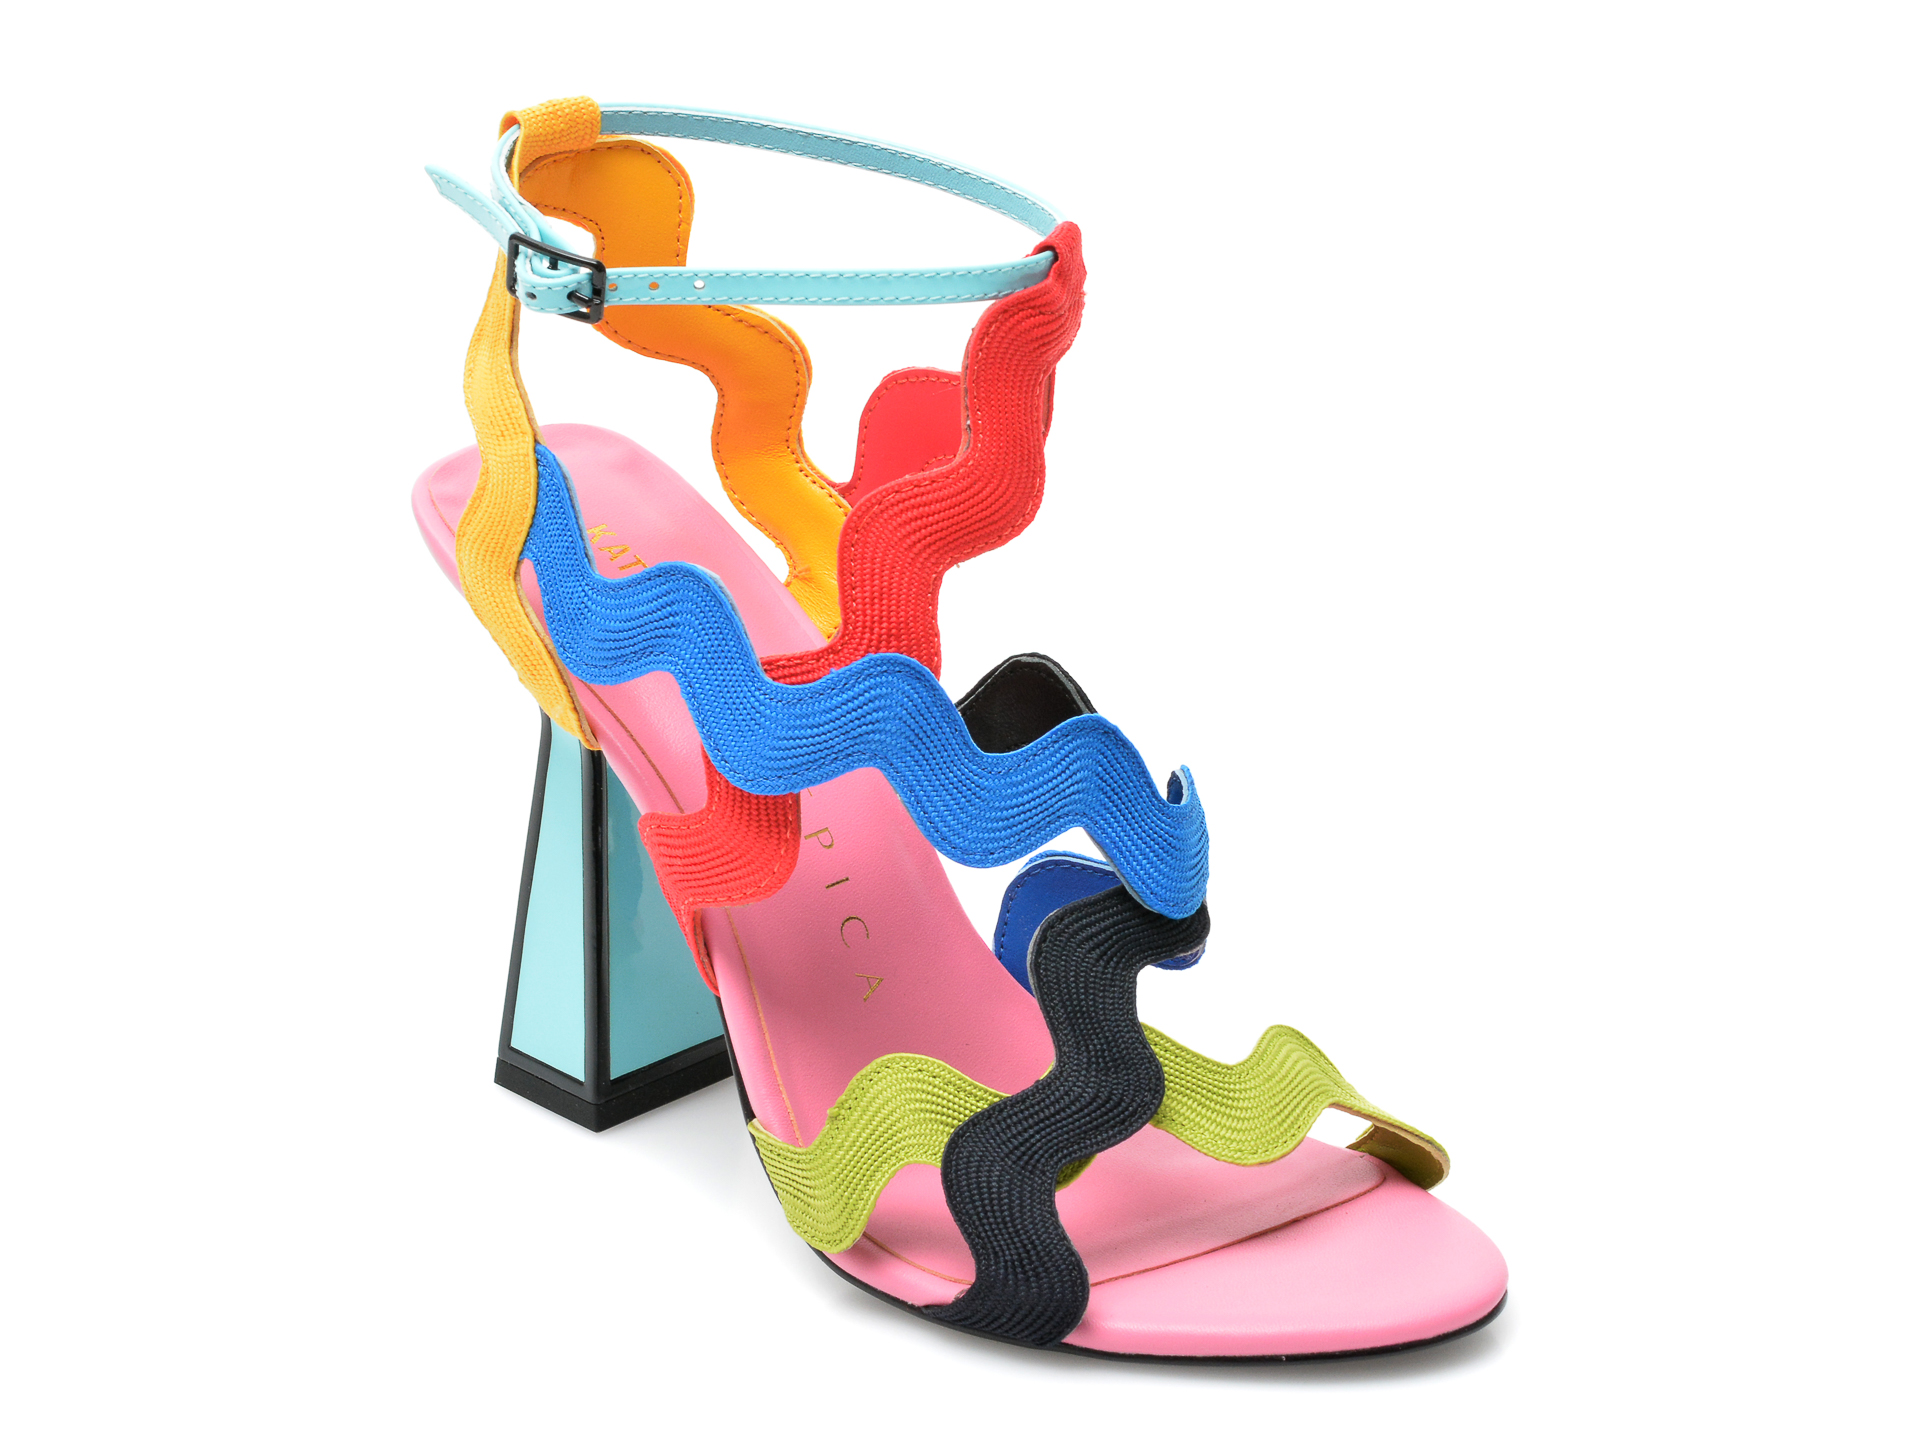 Sandale KAT MACONIE multicolore, JIHAN, din material textil